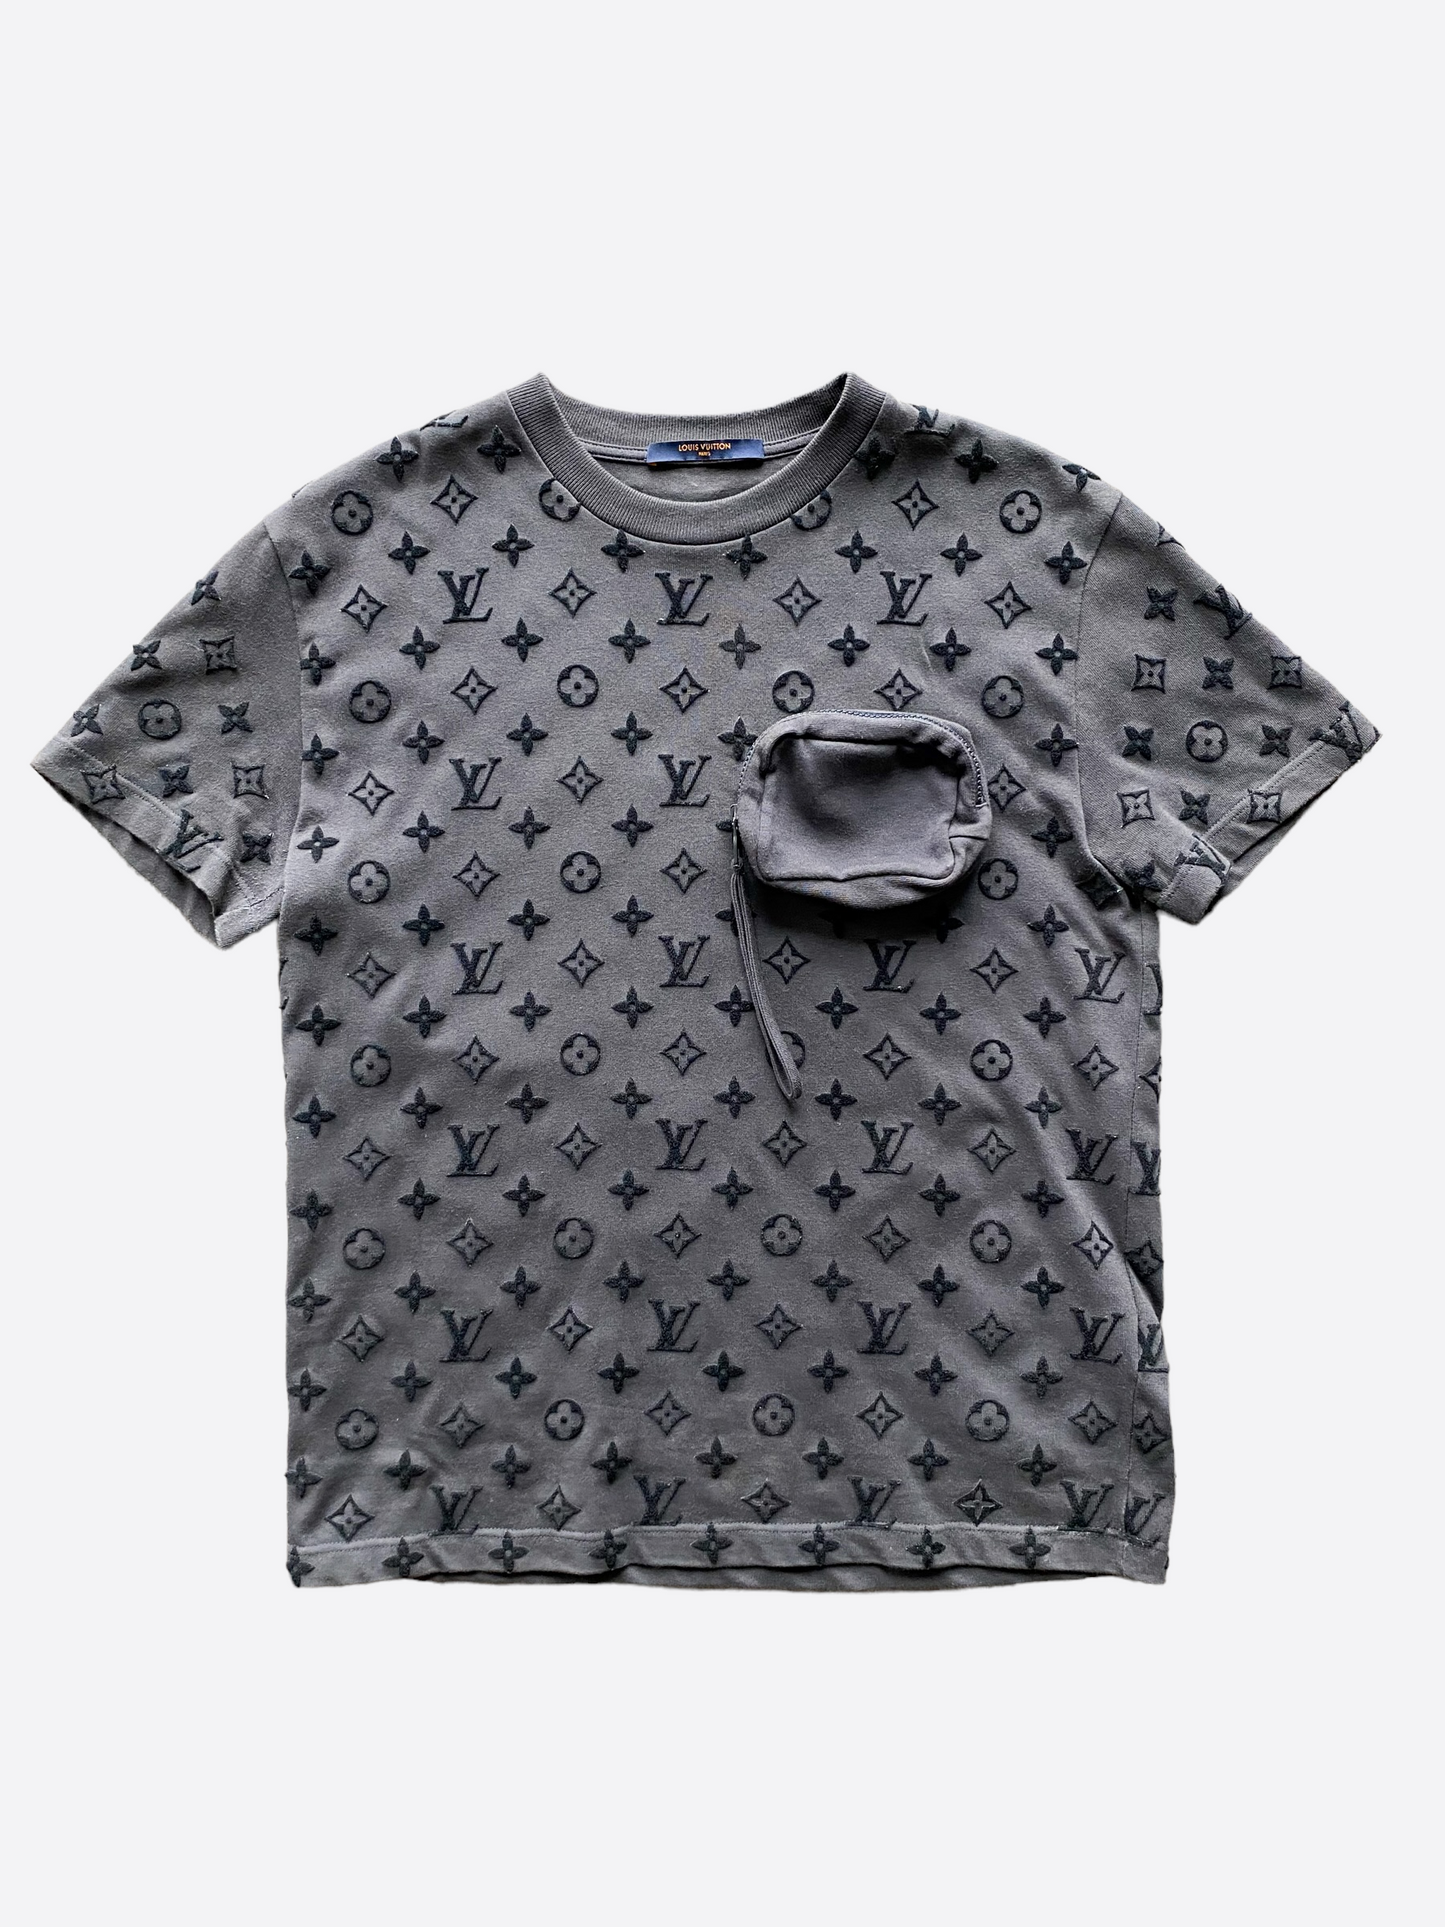 Louis Vuitton Louis Vuitton Hook and Loop Monogram T Shirt